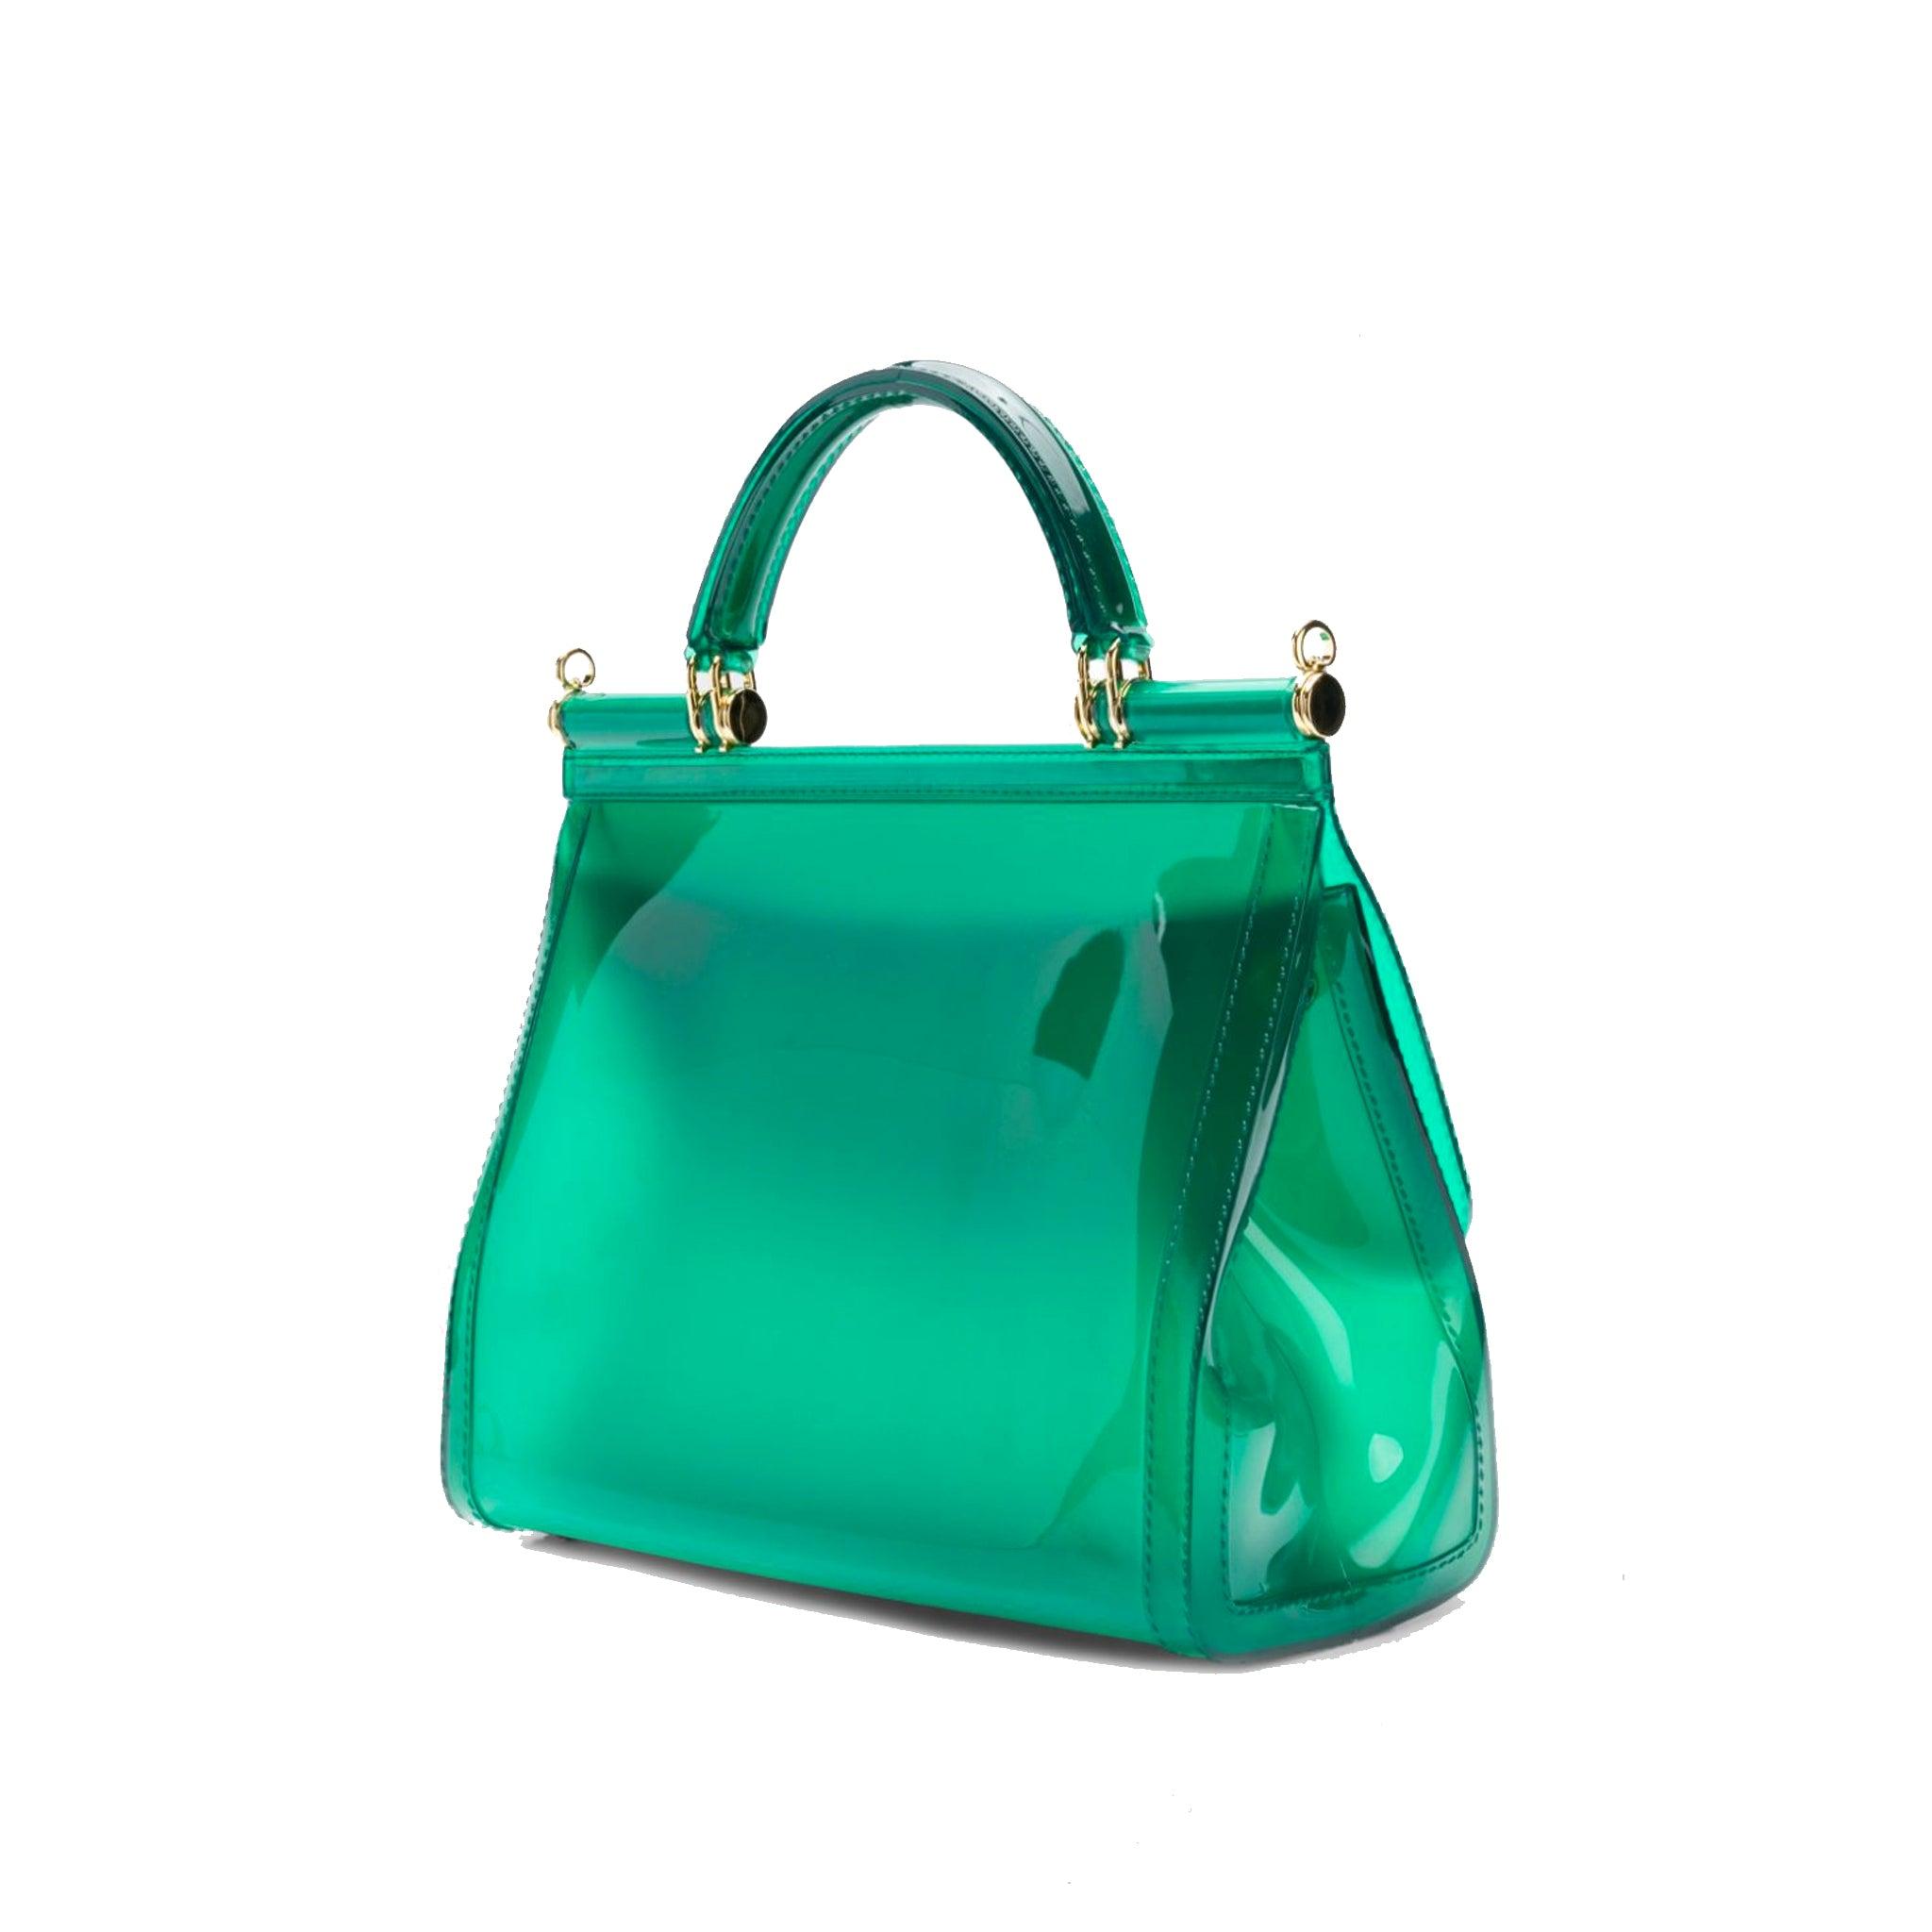 Dolce & Gabbana Sicily Rubber Bag in Green | Lyst